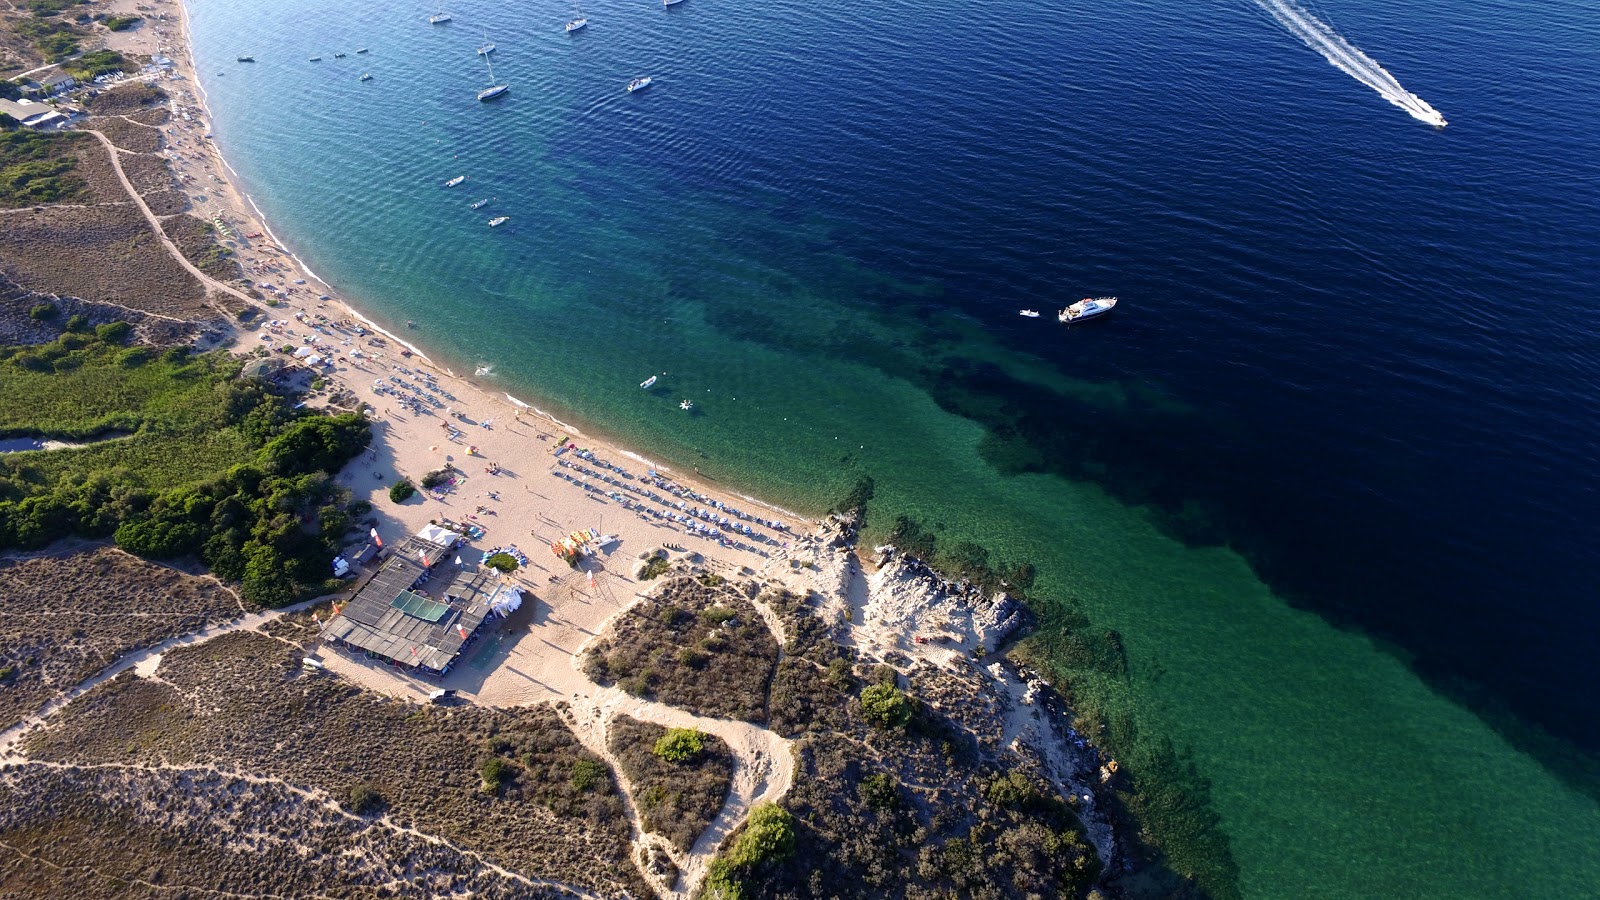 Photo of Spiaggia di Porto Pollo with turquoise pure water surface